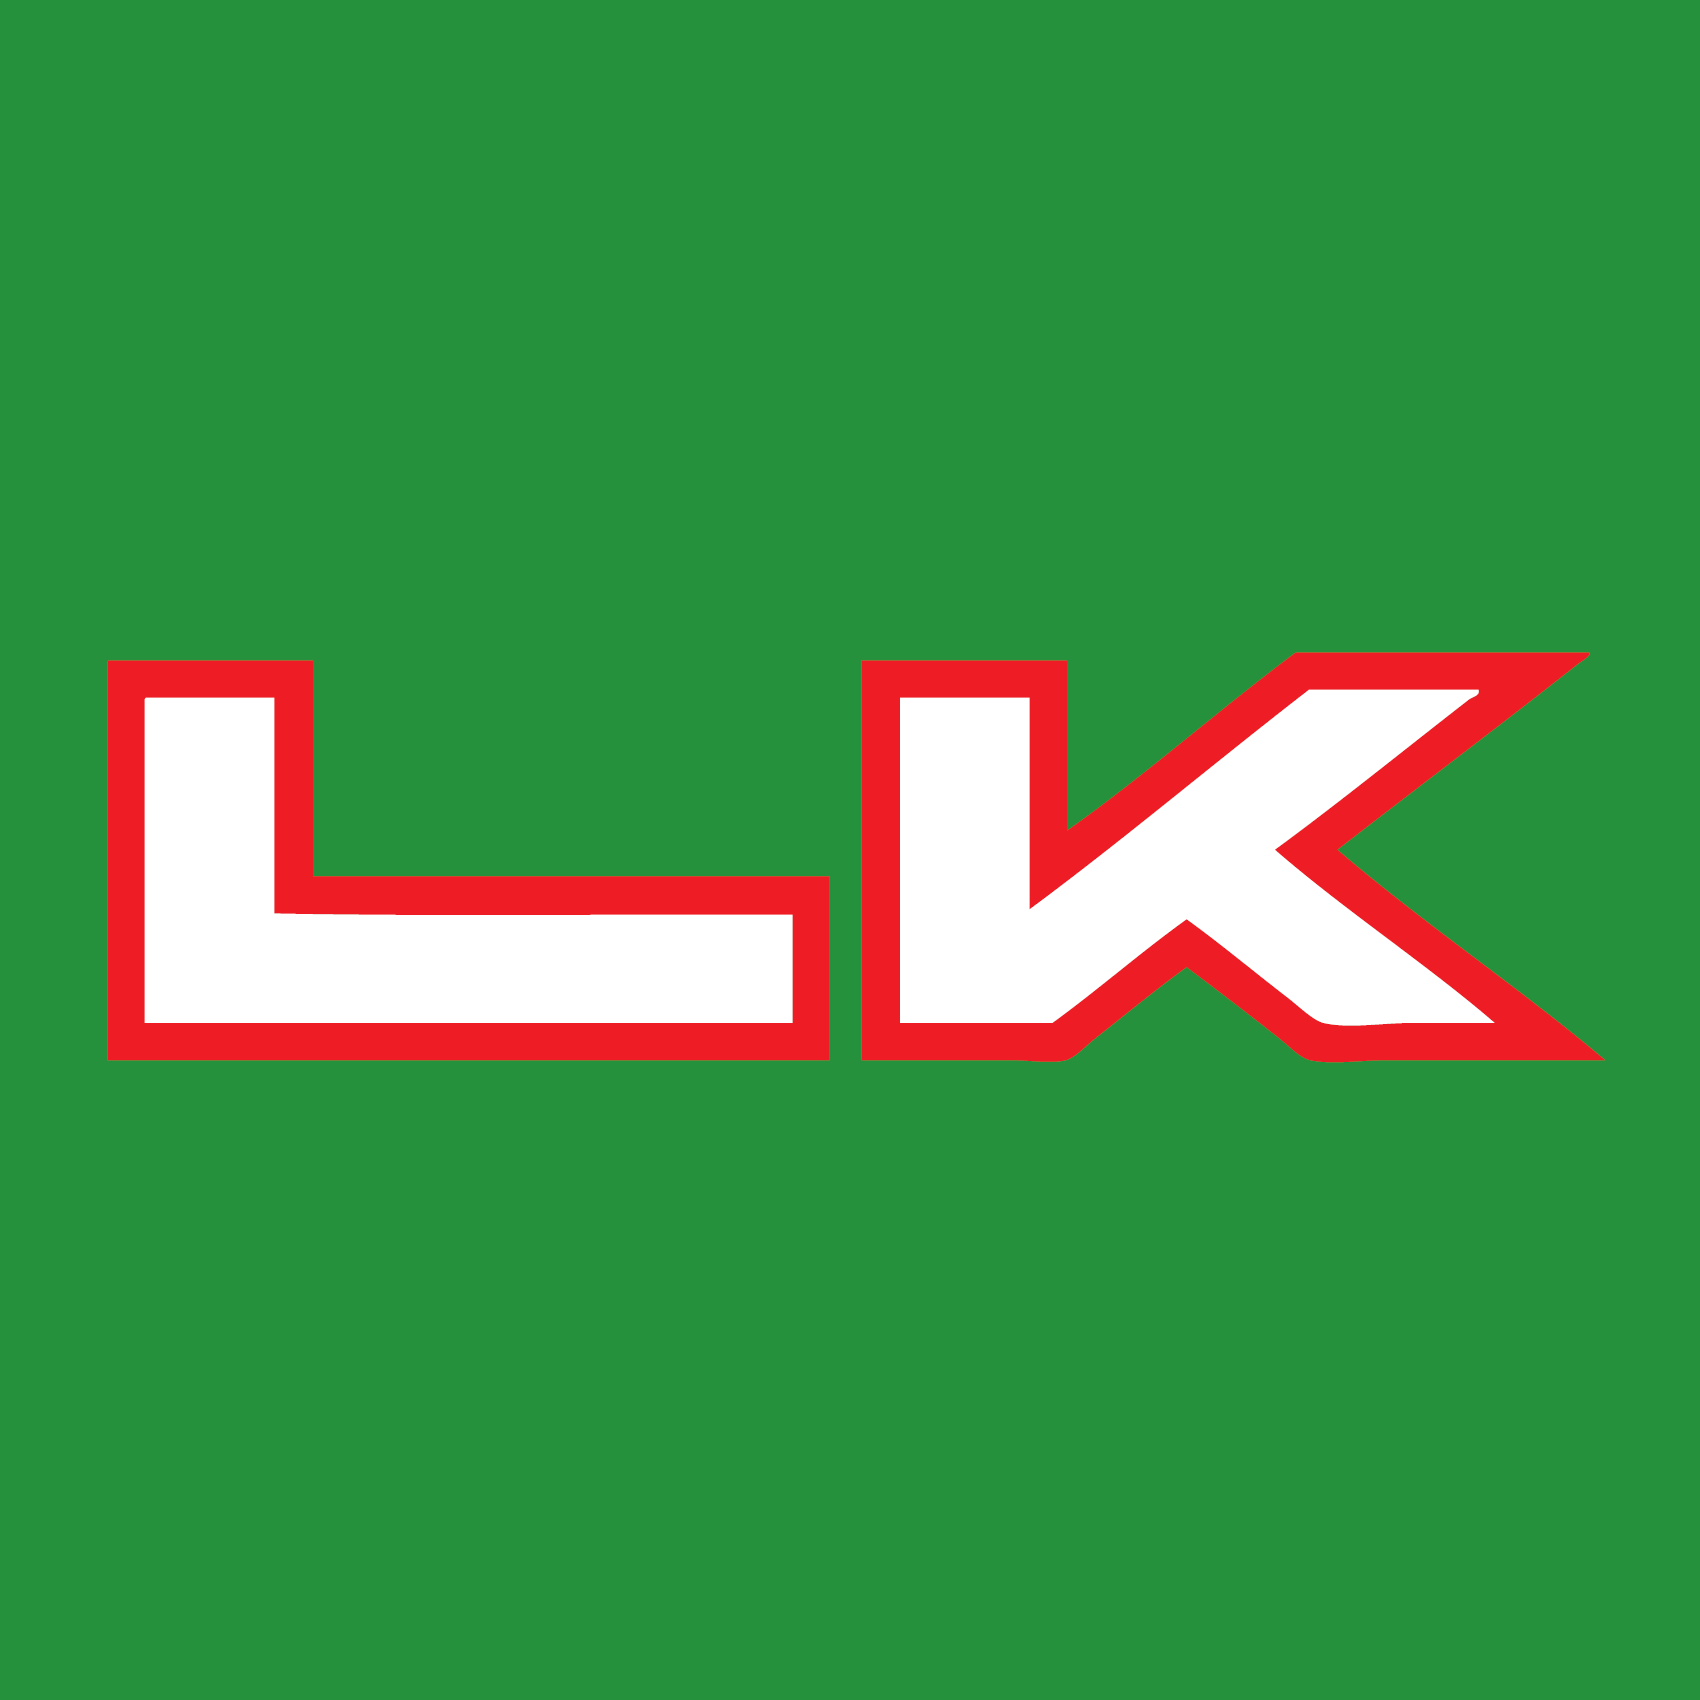 LK Metallwaren GmbH in Schwabach - Logo